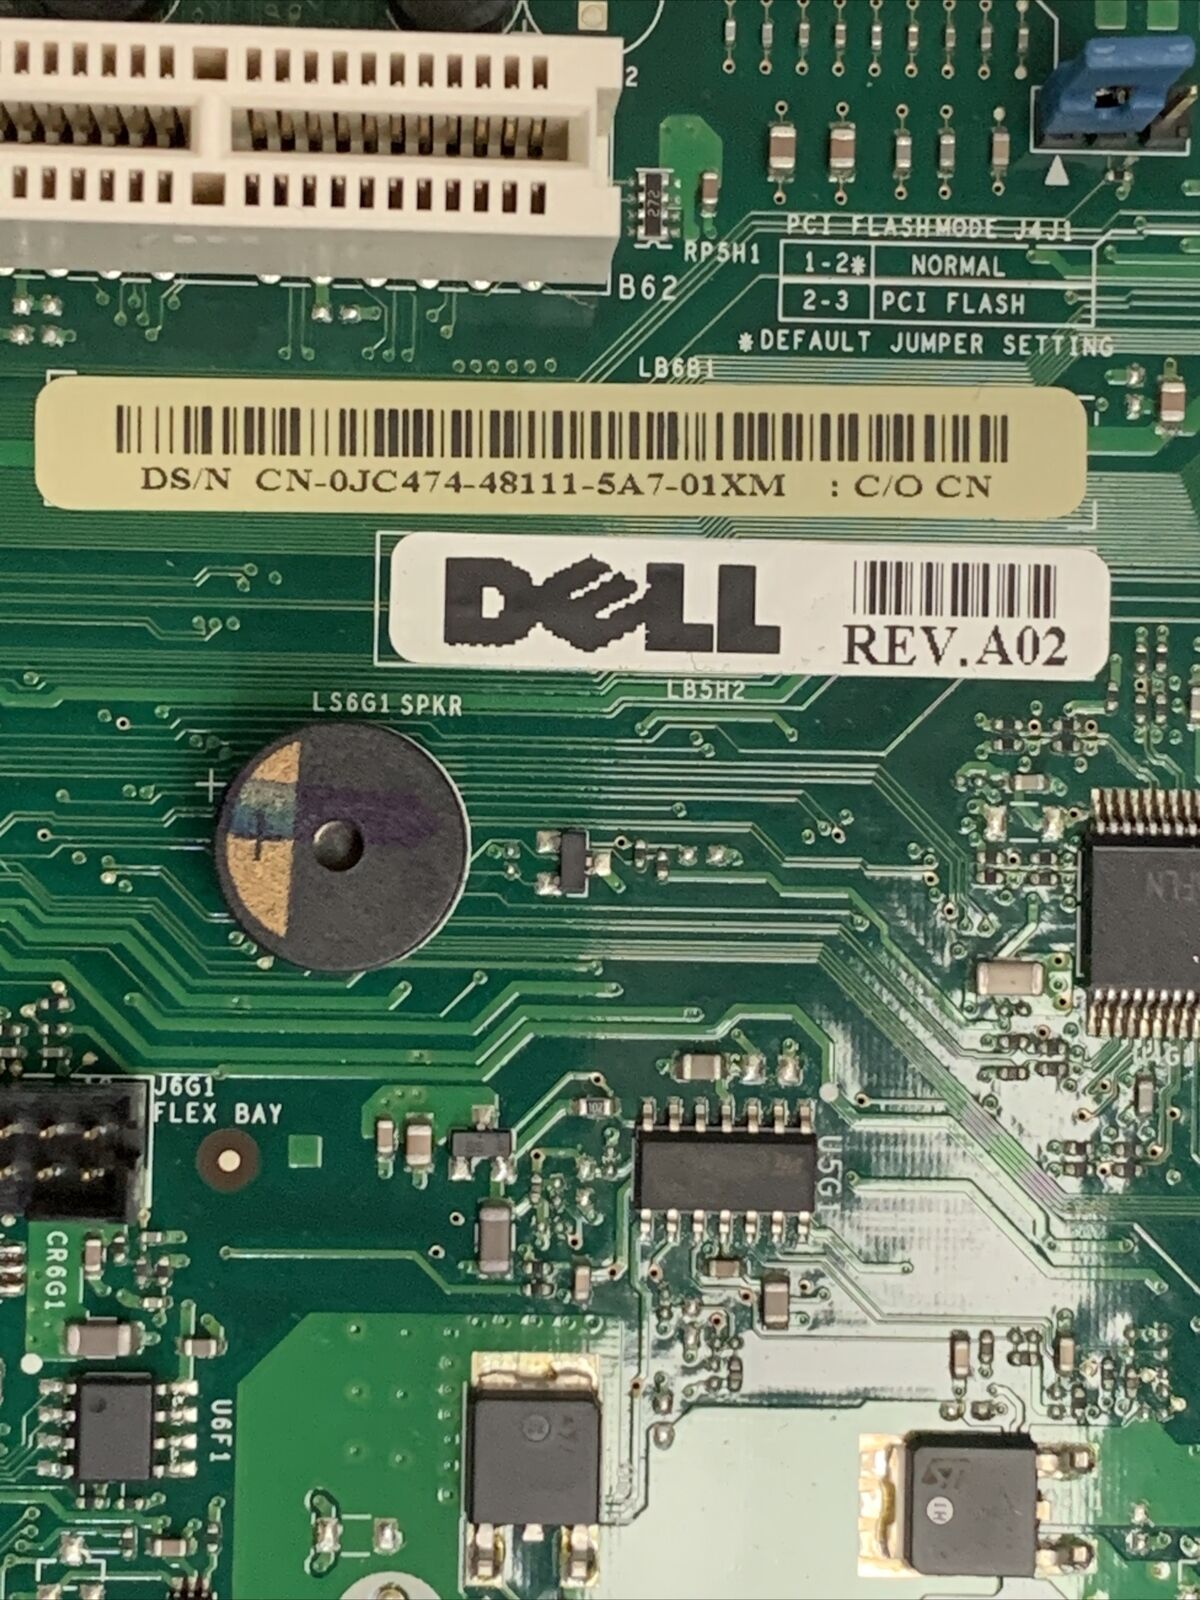 Dell Dimension 3100 MT Intel Pentium 4 2.8GHz 2GB RAM No HDD No OS